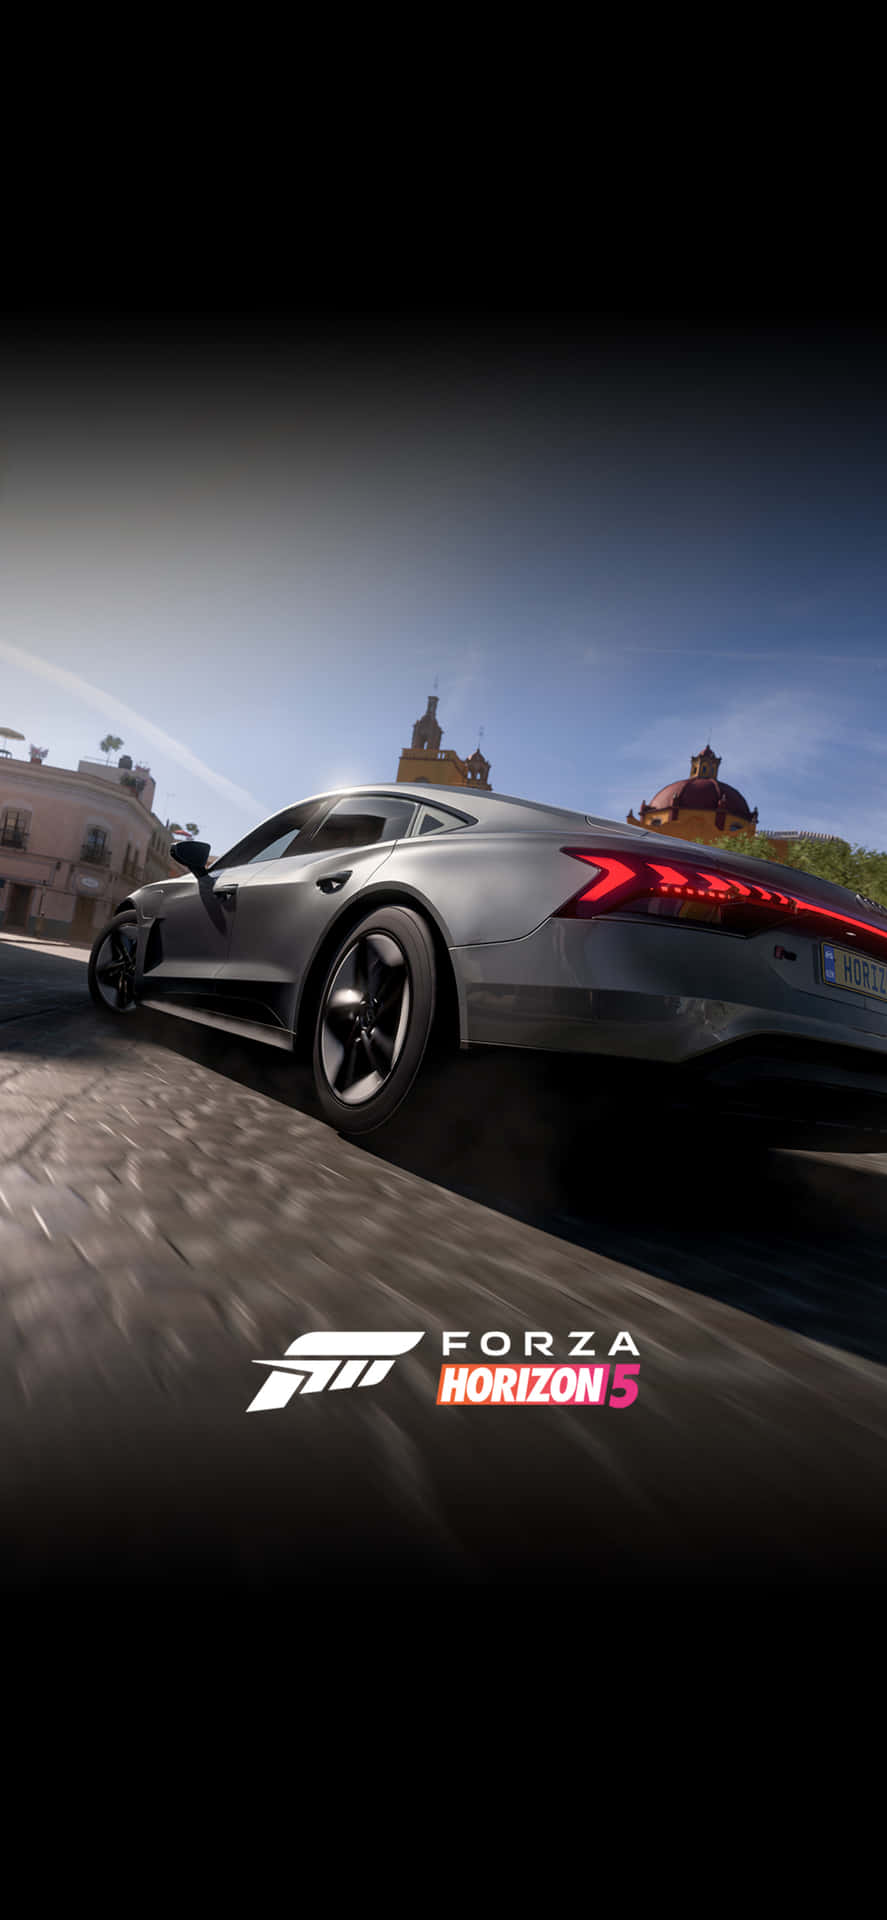 Grålamborghini Iphone X Forza Motorsport 7 Bakgrundsbild.